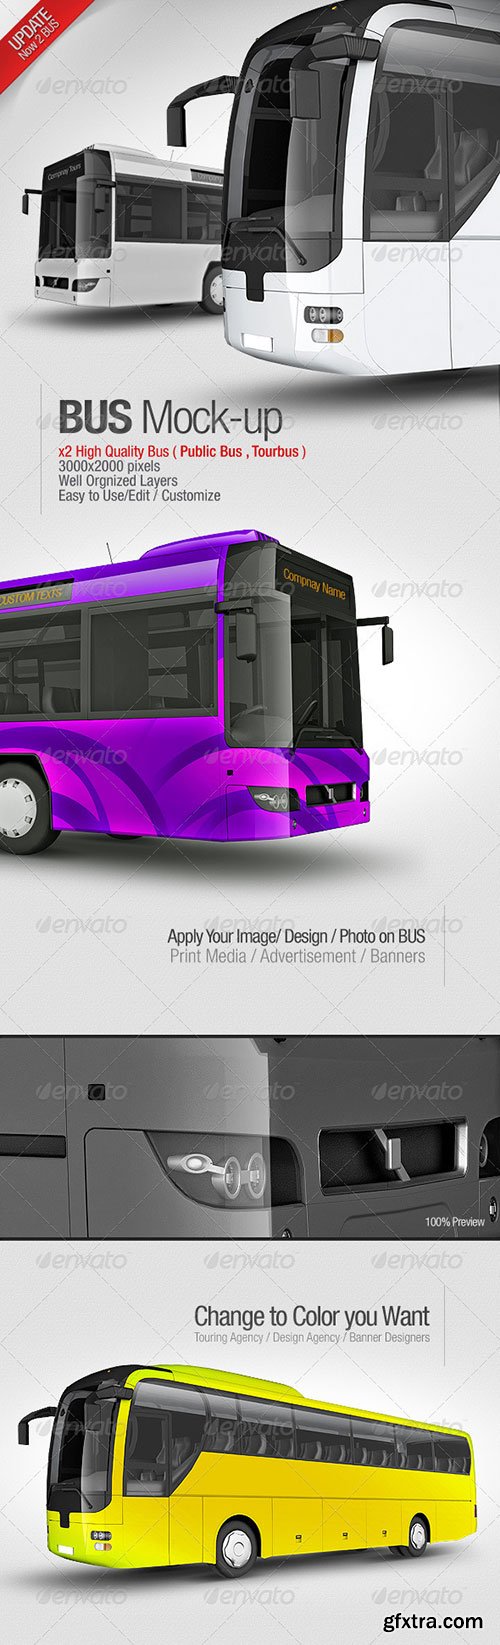 GraphicRiver - Bus Mockup